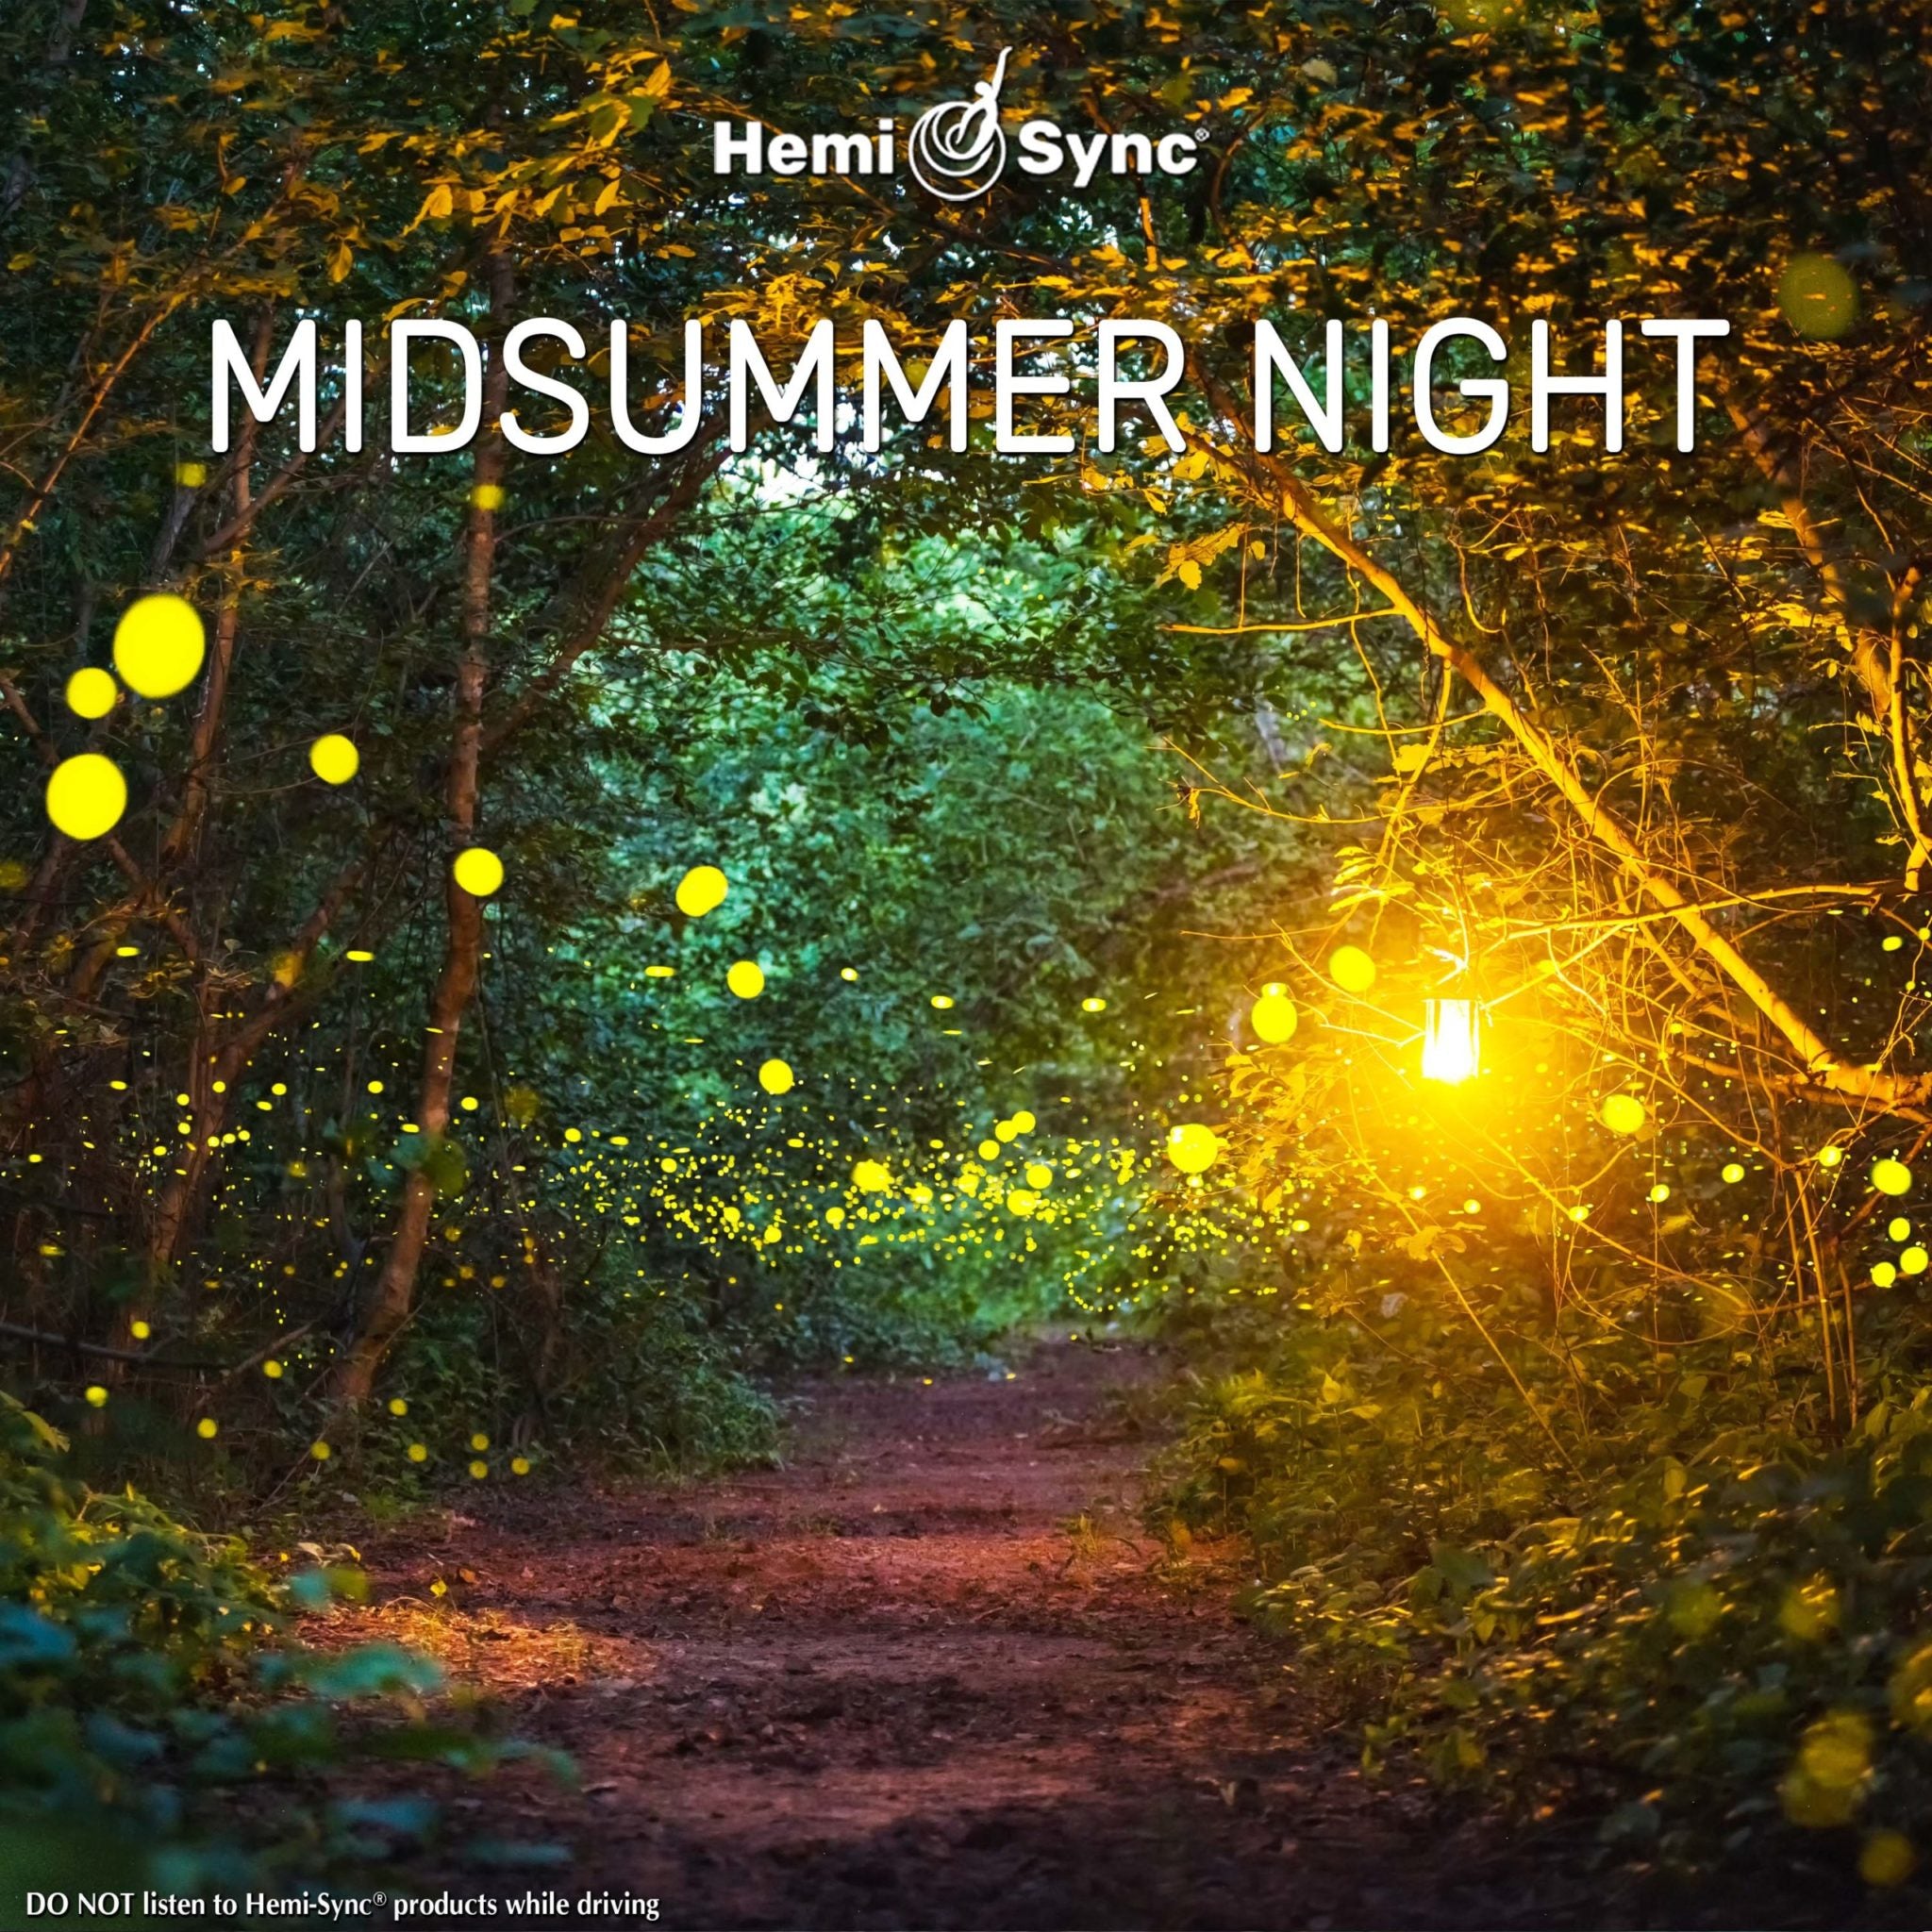 Midsummer Night – The Monroe Institute